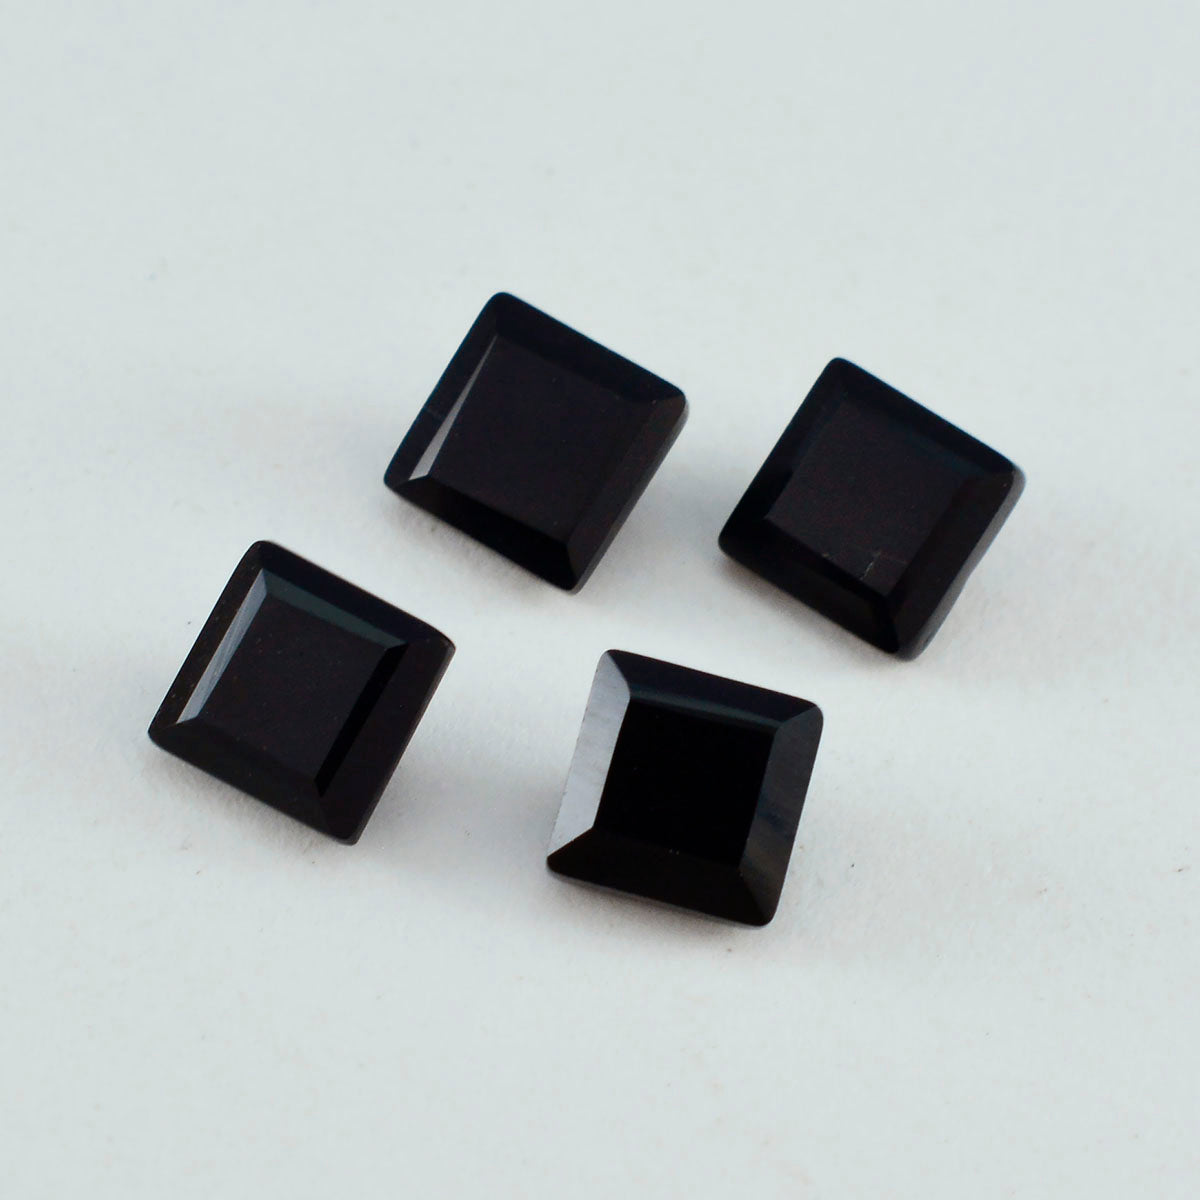 Riyogems 1PC Genuine Black Onyx Faceted 9x9 mm Square Shape awesome Quality Gem